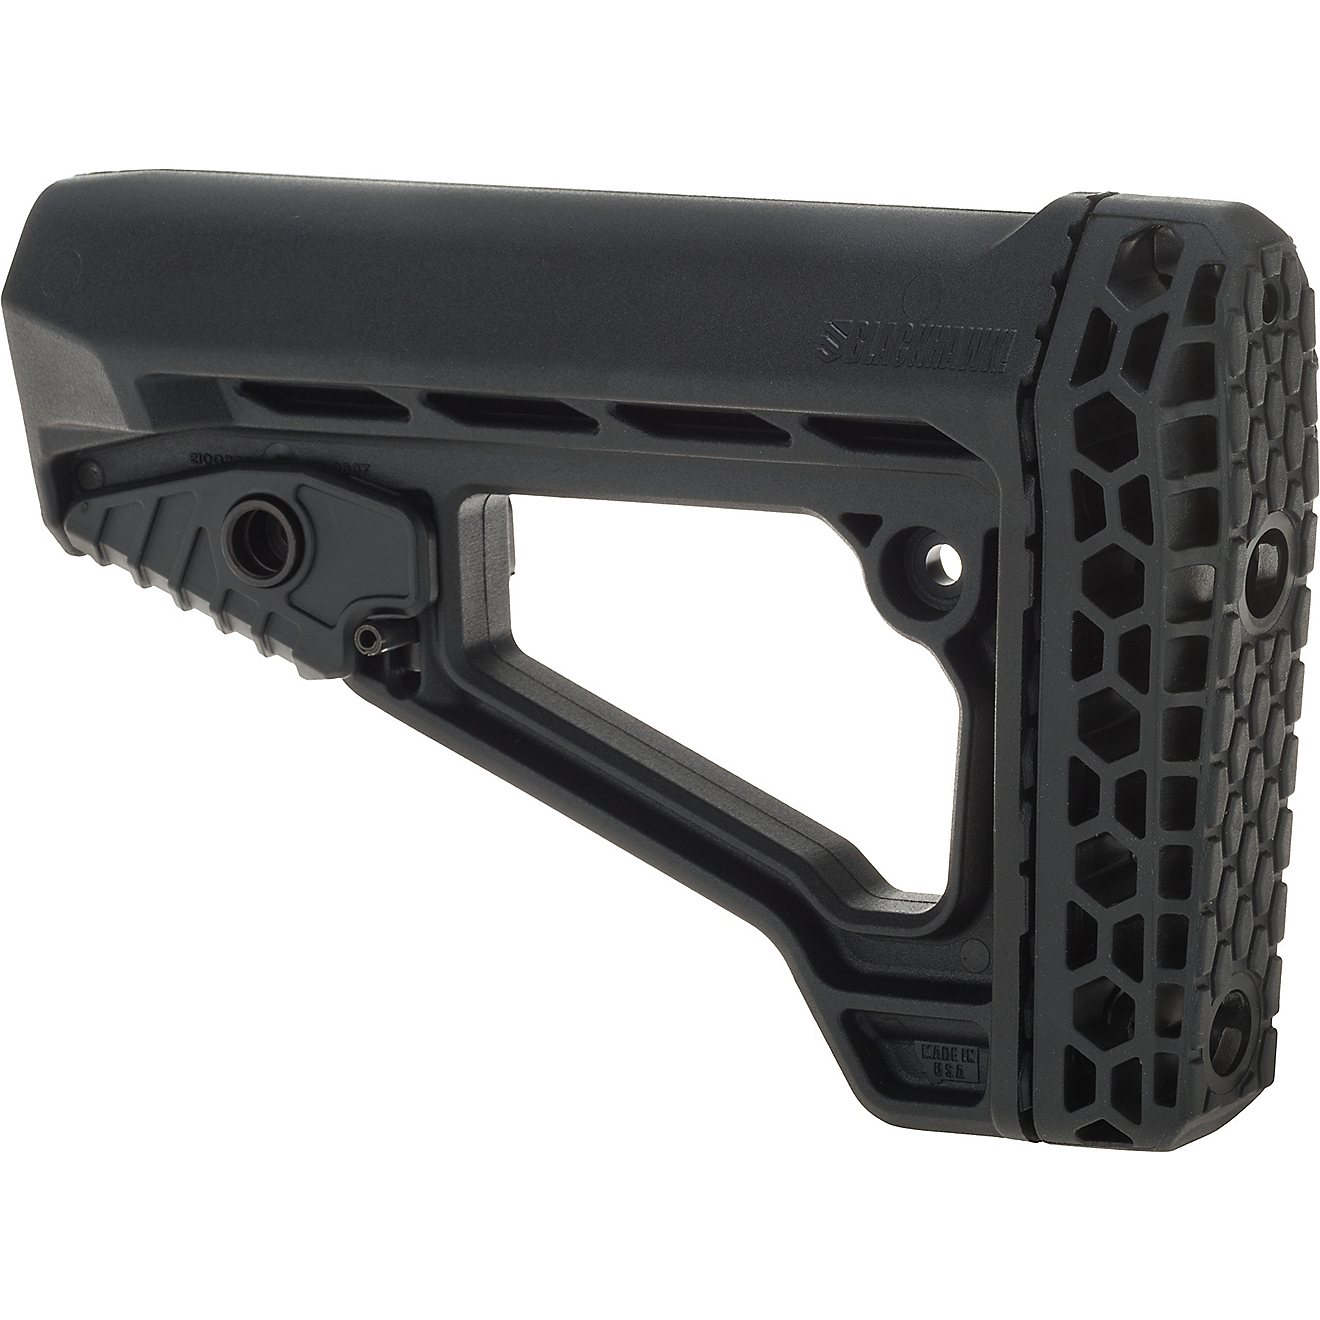 Blackhawk Knoxx Axiom Adjustable Carbine Stock                                                                                   - view number 1